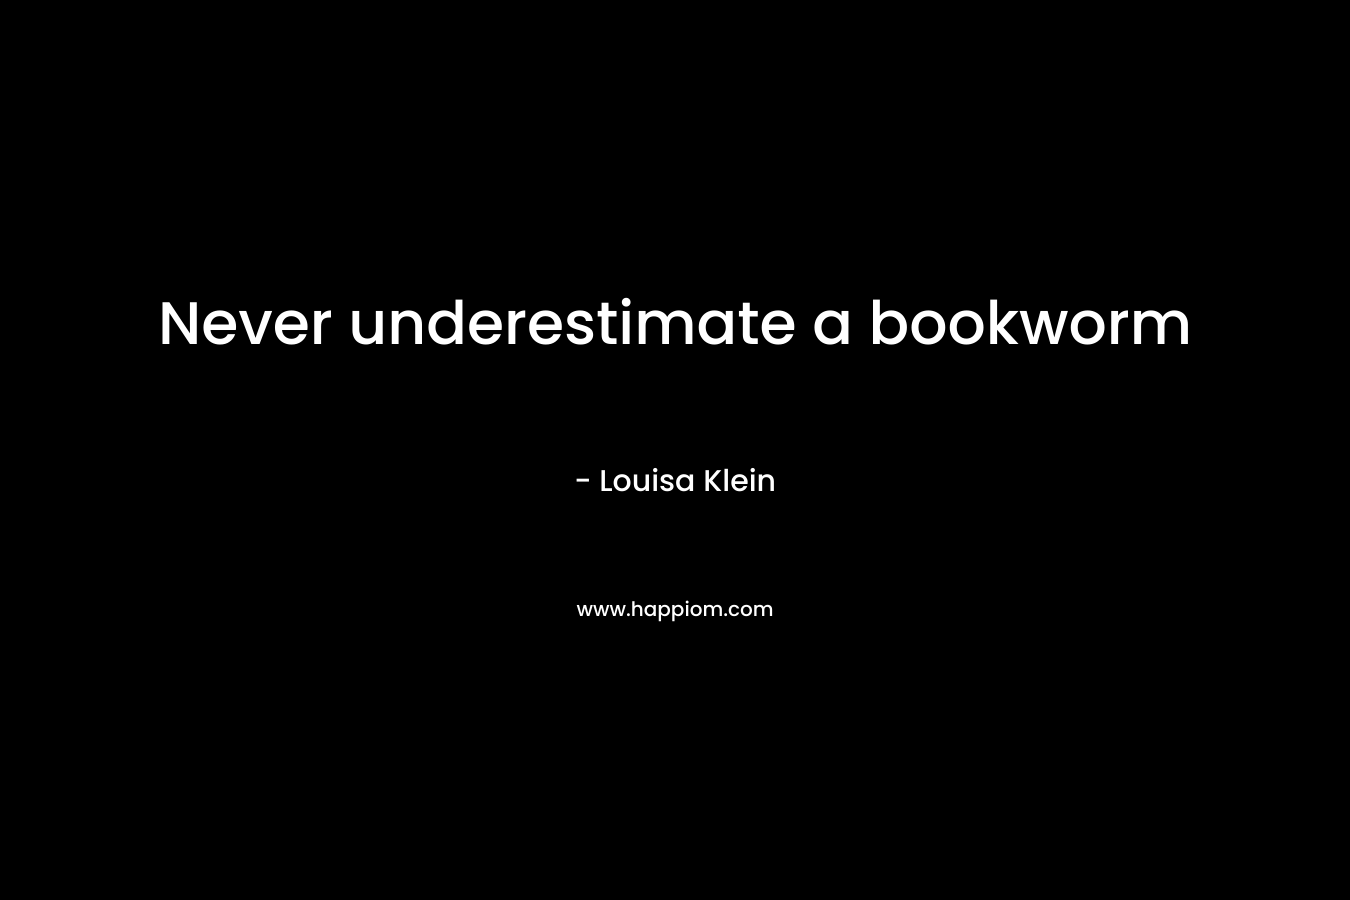 Never underestimate a bookworm